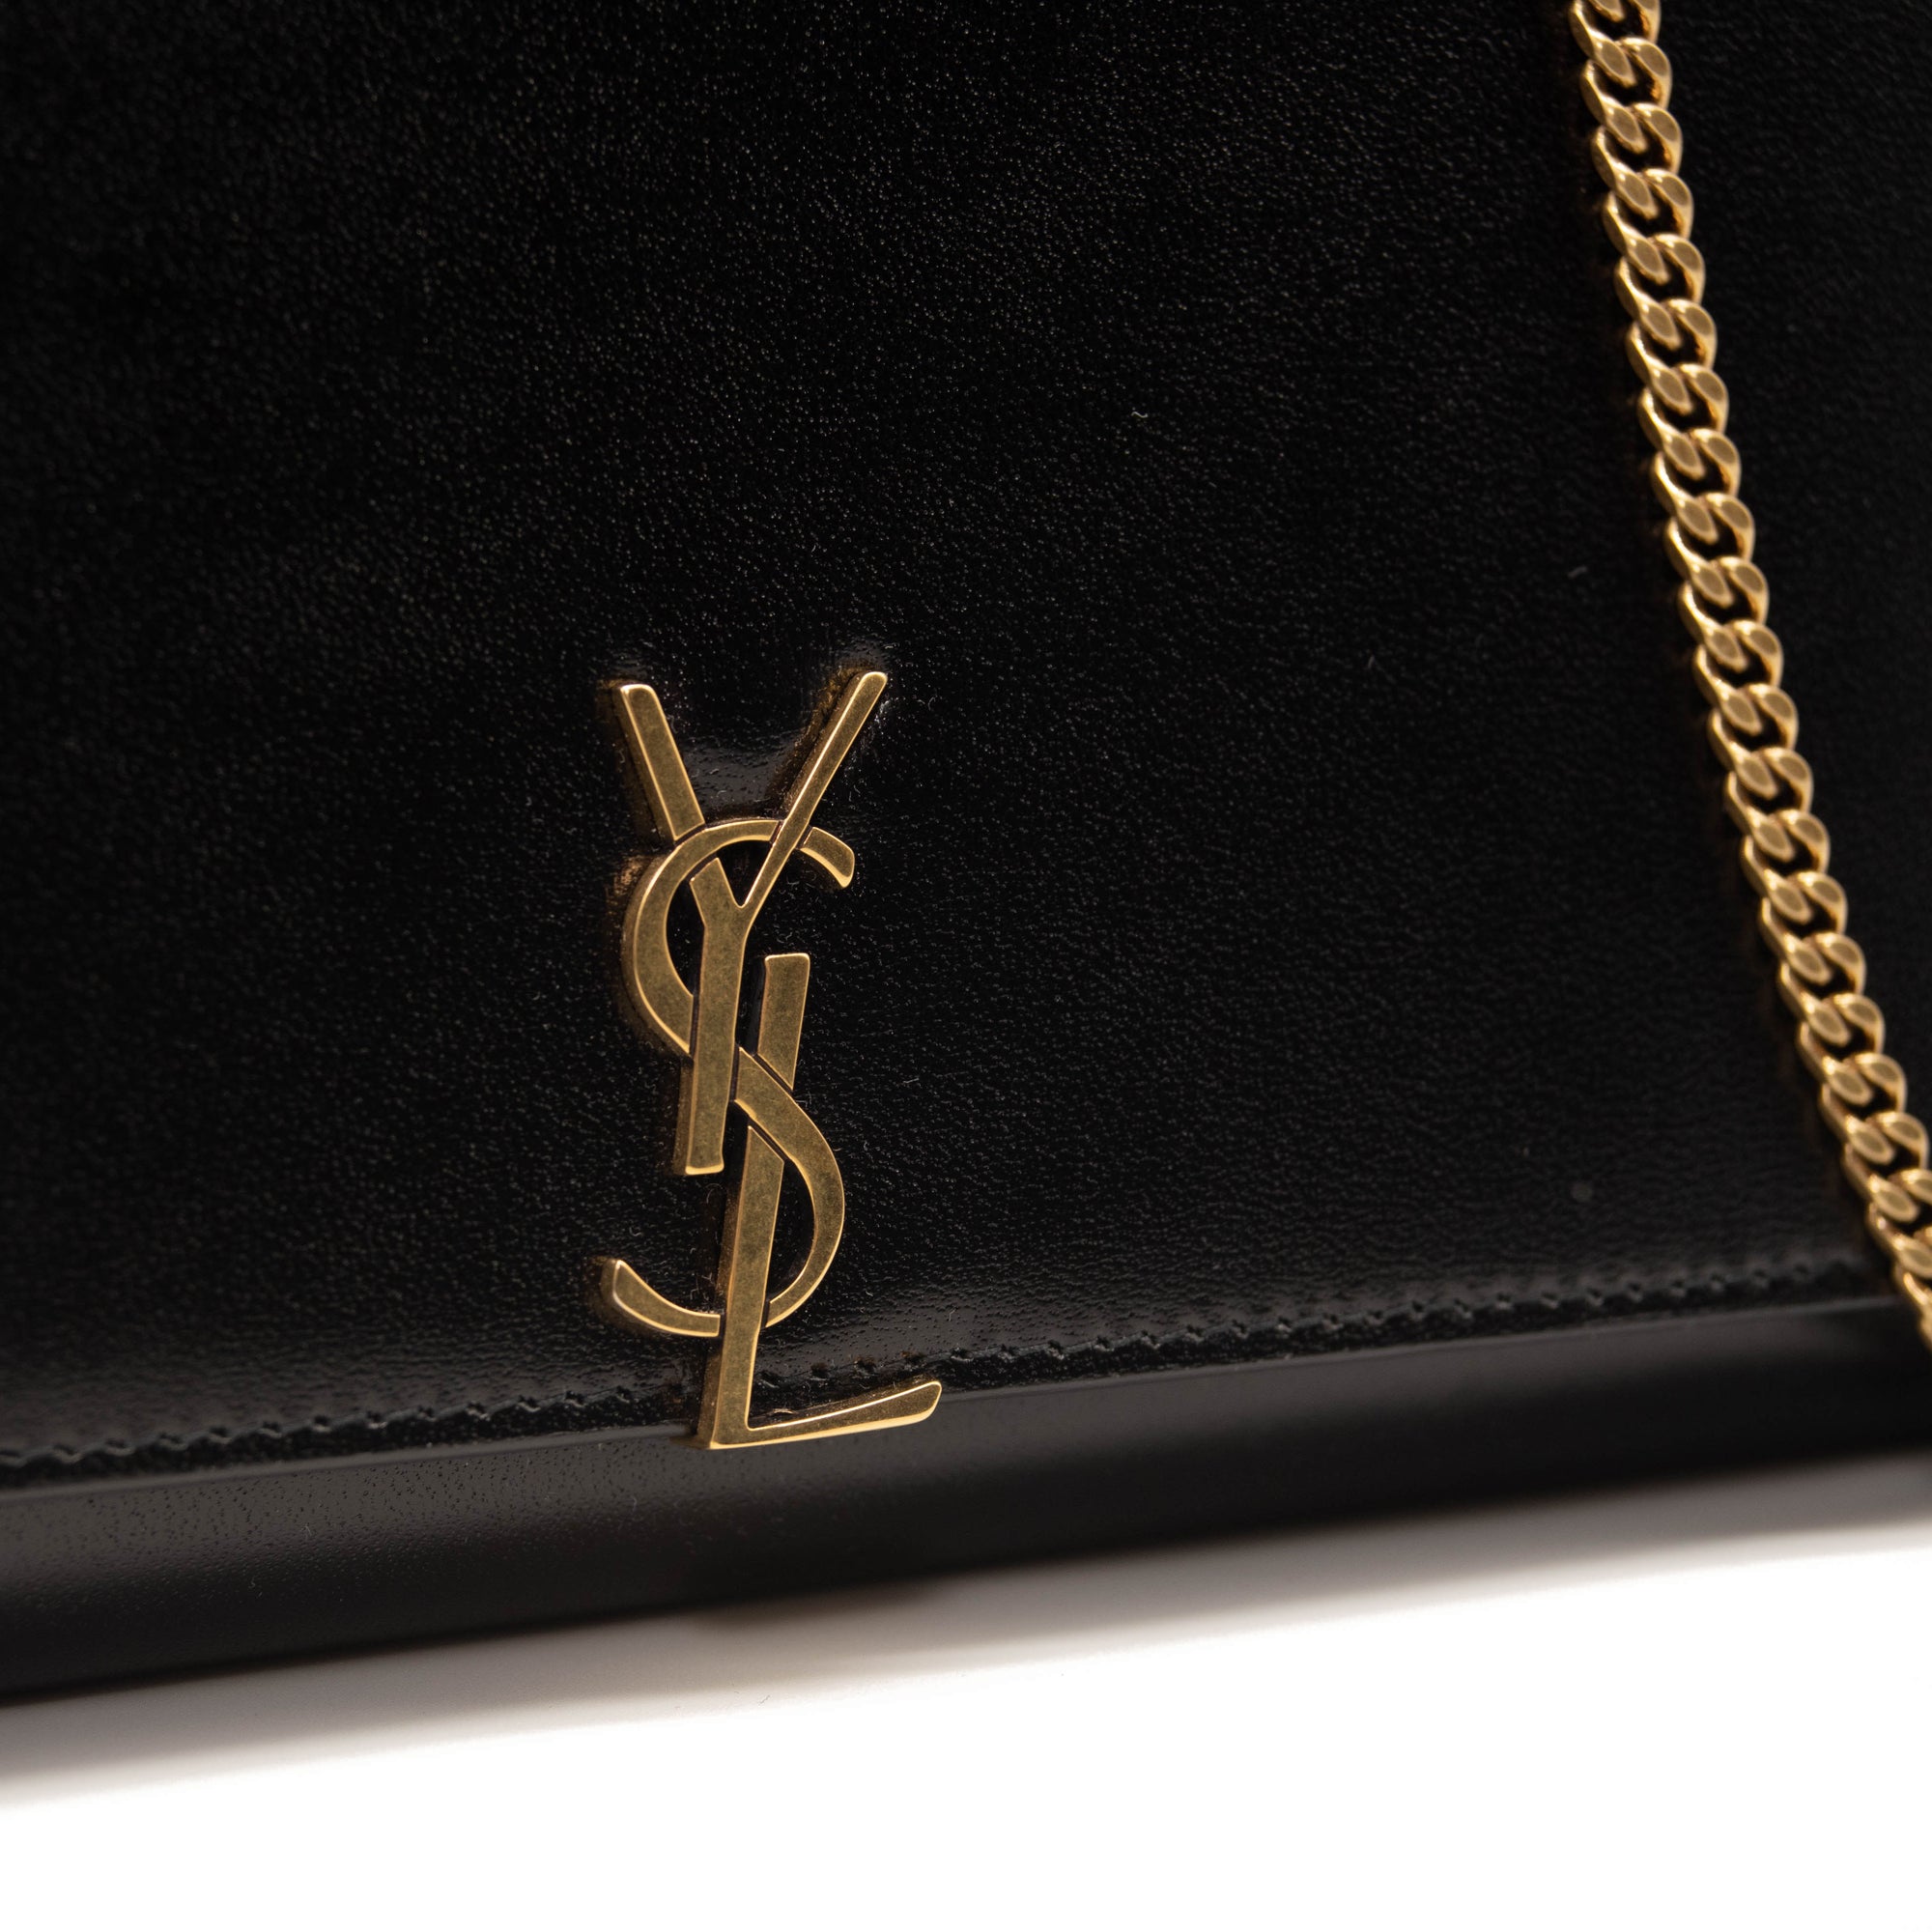 ysl wallet on chain black